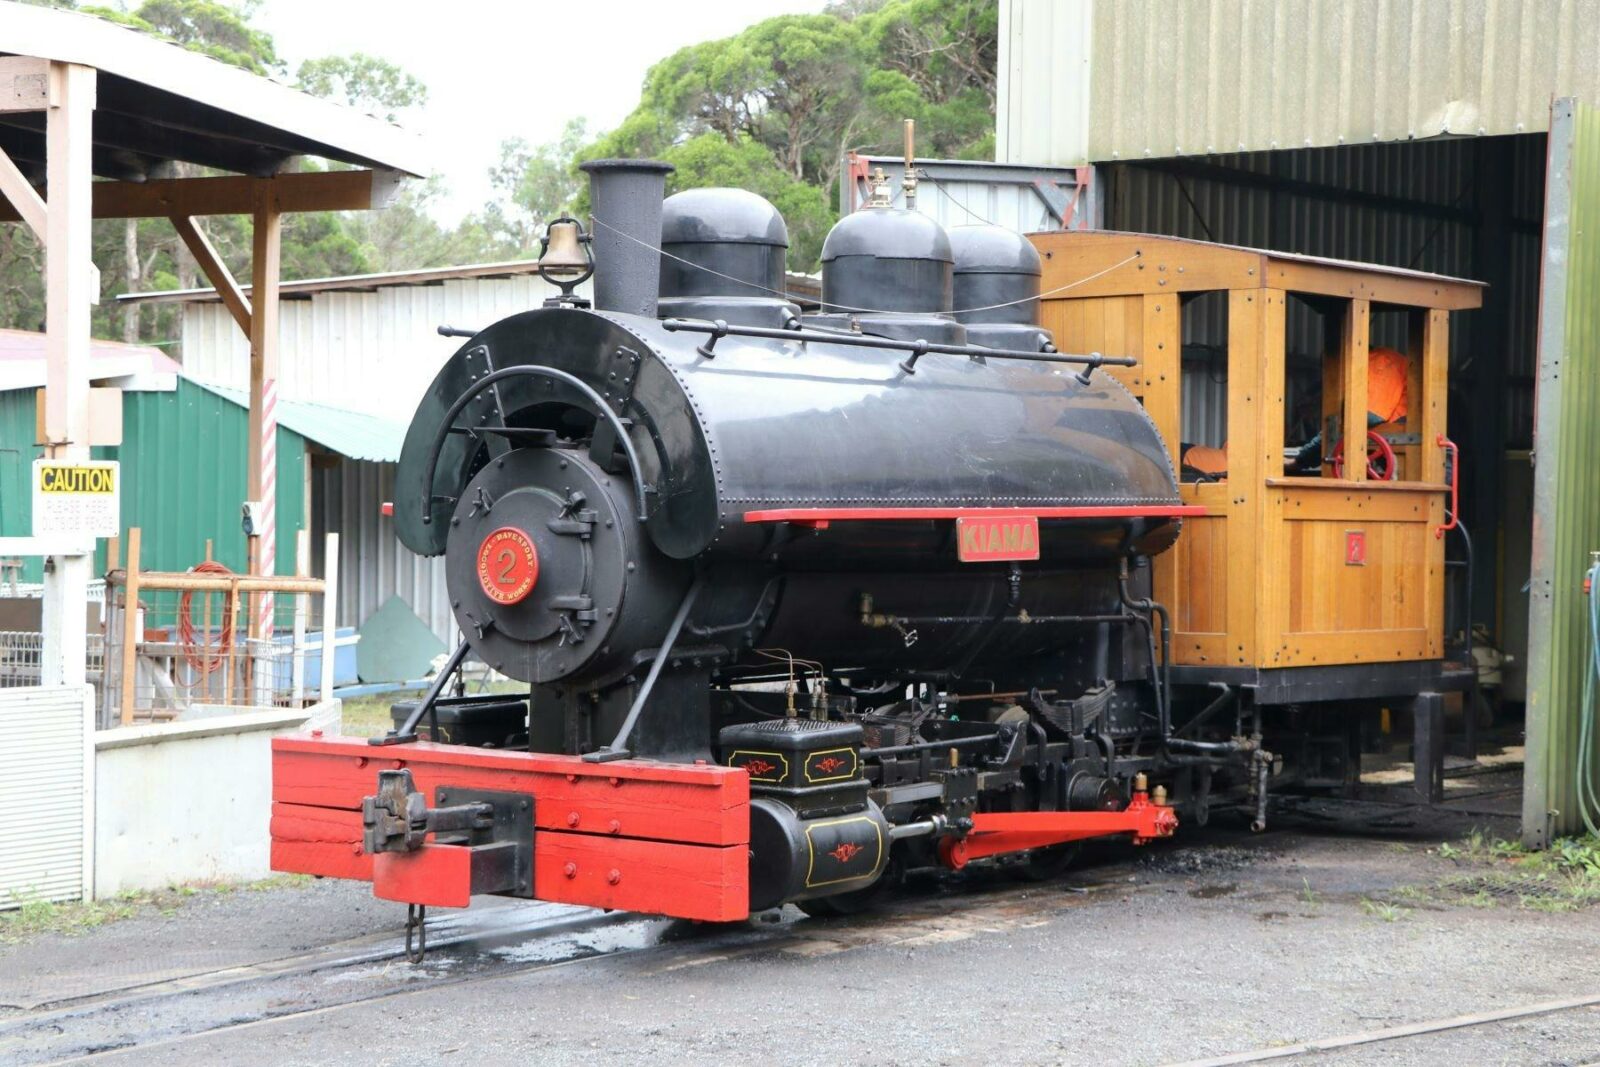 Illawarra Light Railway Museum